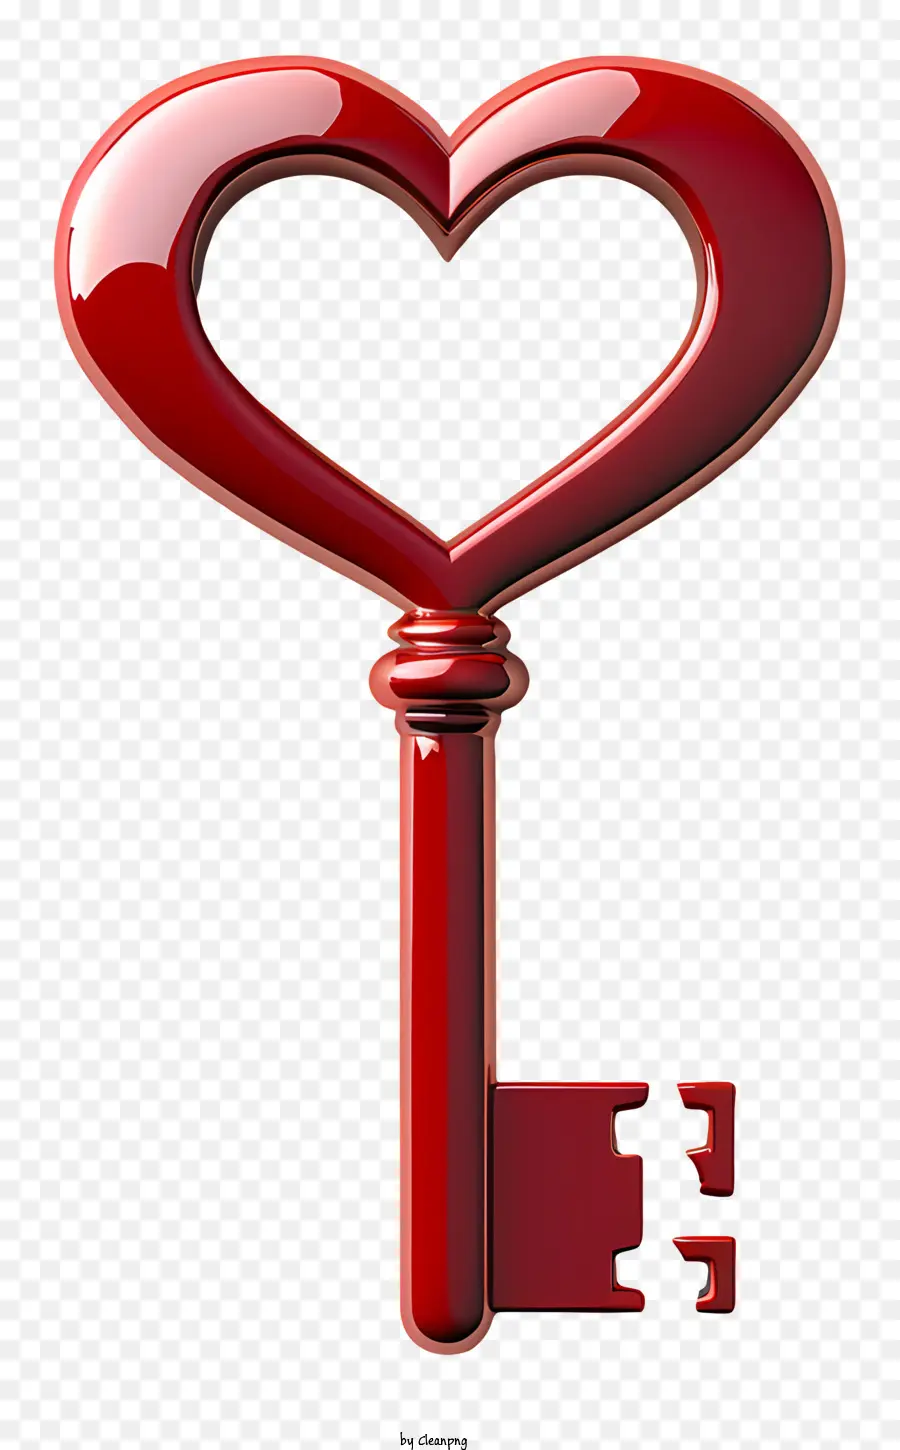 valentine key heart-shaped key red plastic key silver heart shiny key